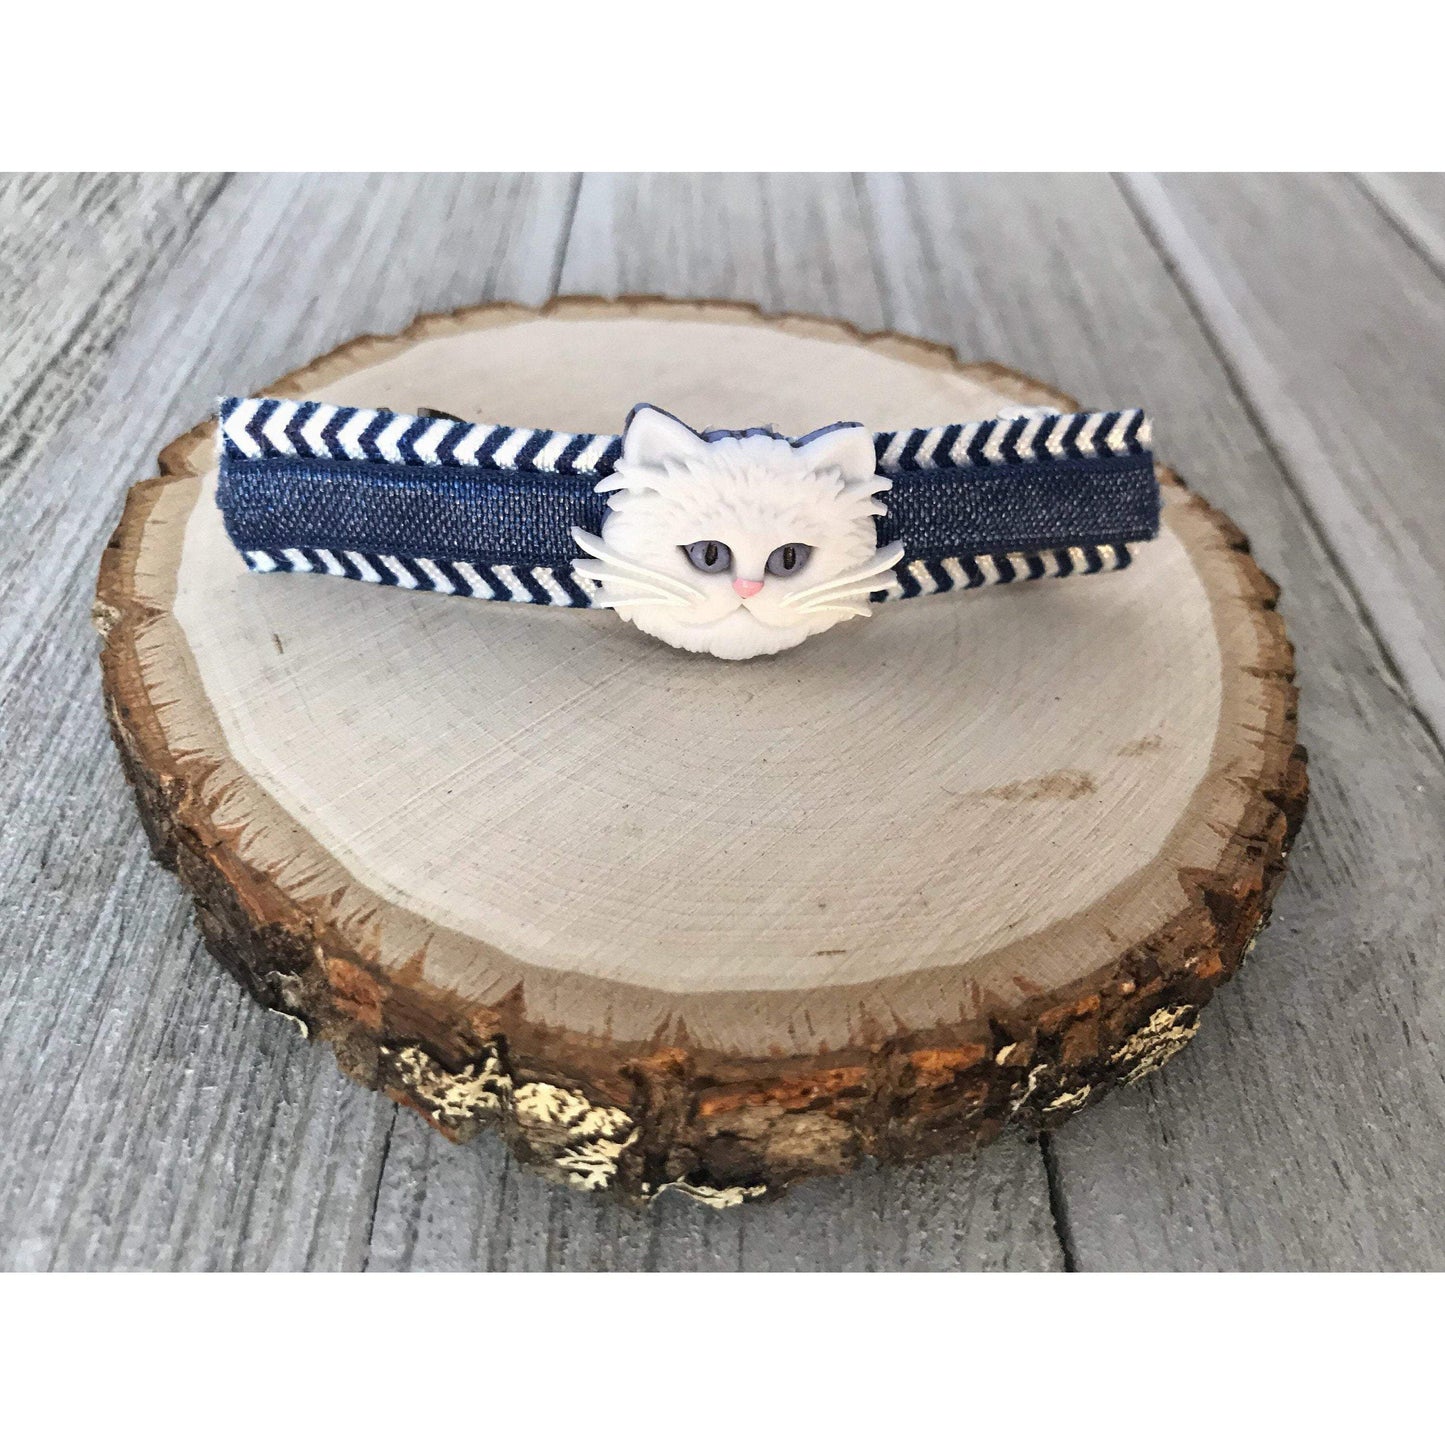 White Cat Barrette with Blue Chevron Design - Charming Feline-Inspired Hair Accessory